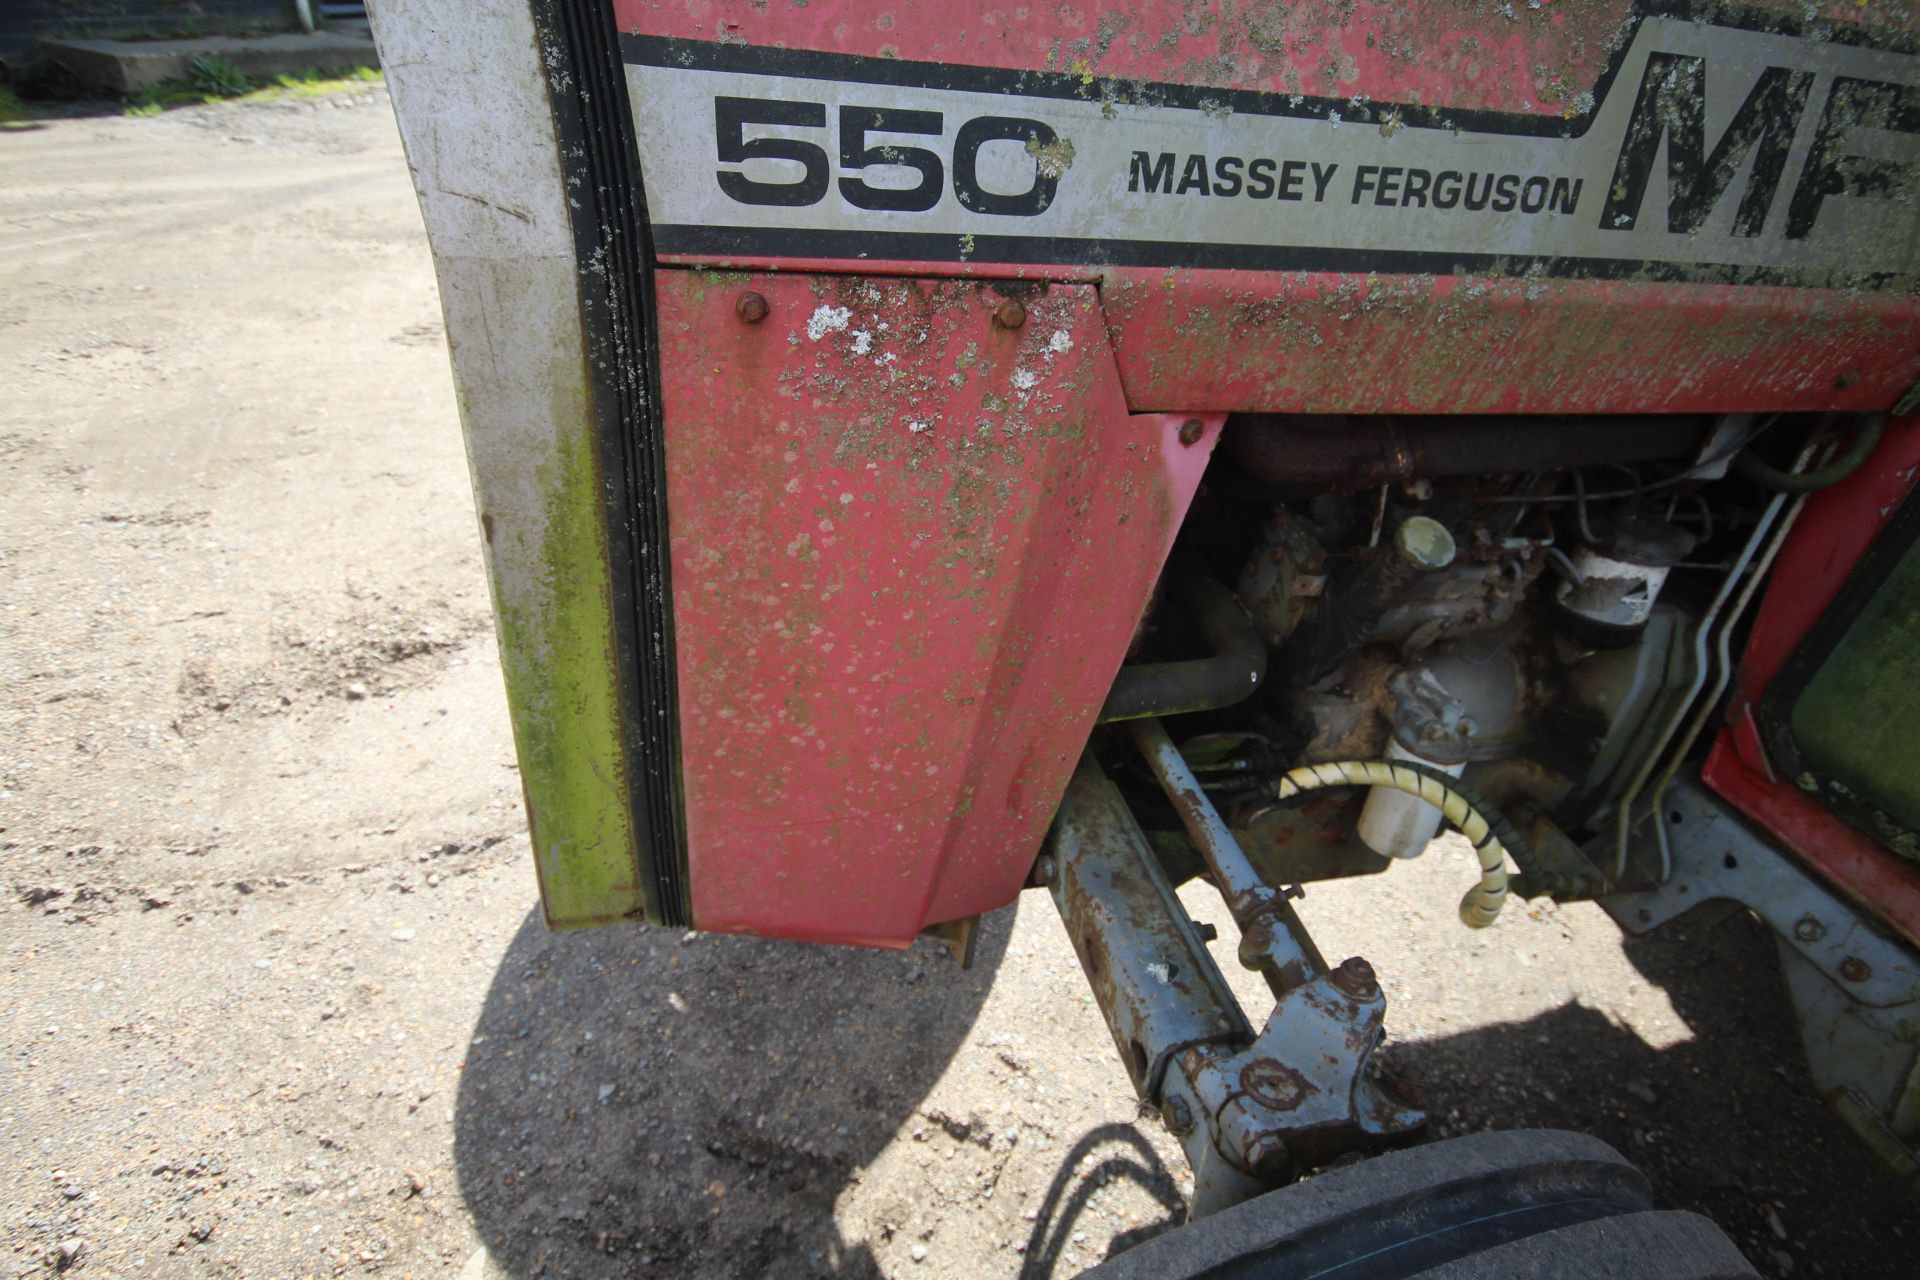 Massey Ferguson 550 2WD tractor. Registration DPV 391T (no paperwork). Date of first registration - Image 7 of 54